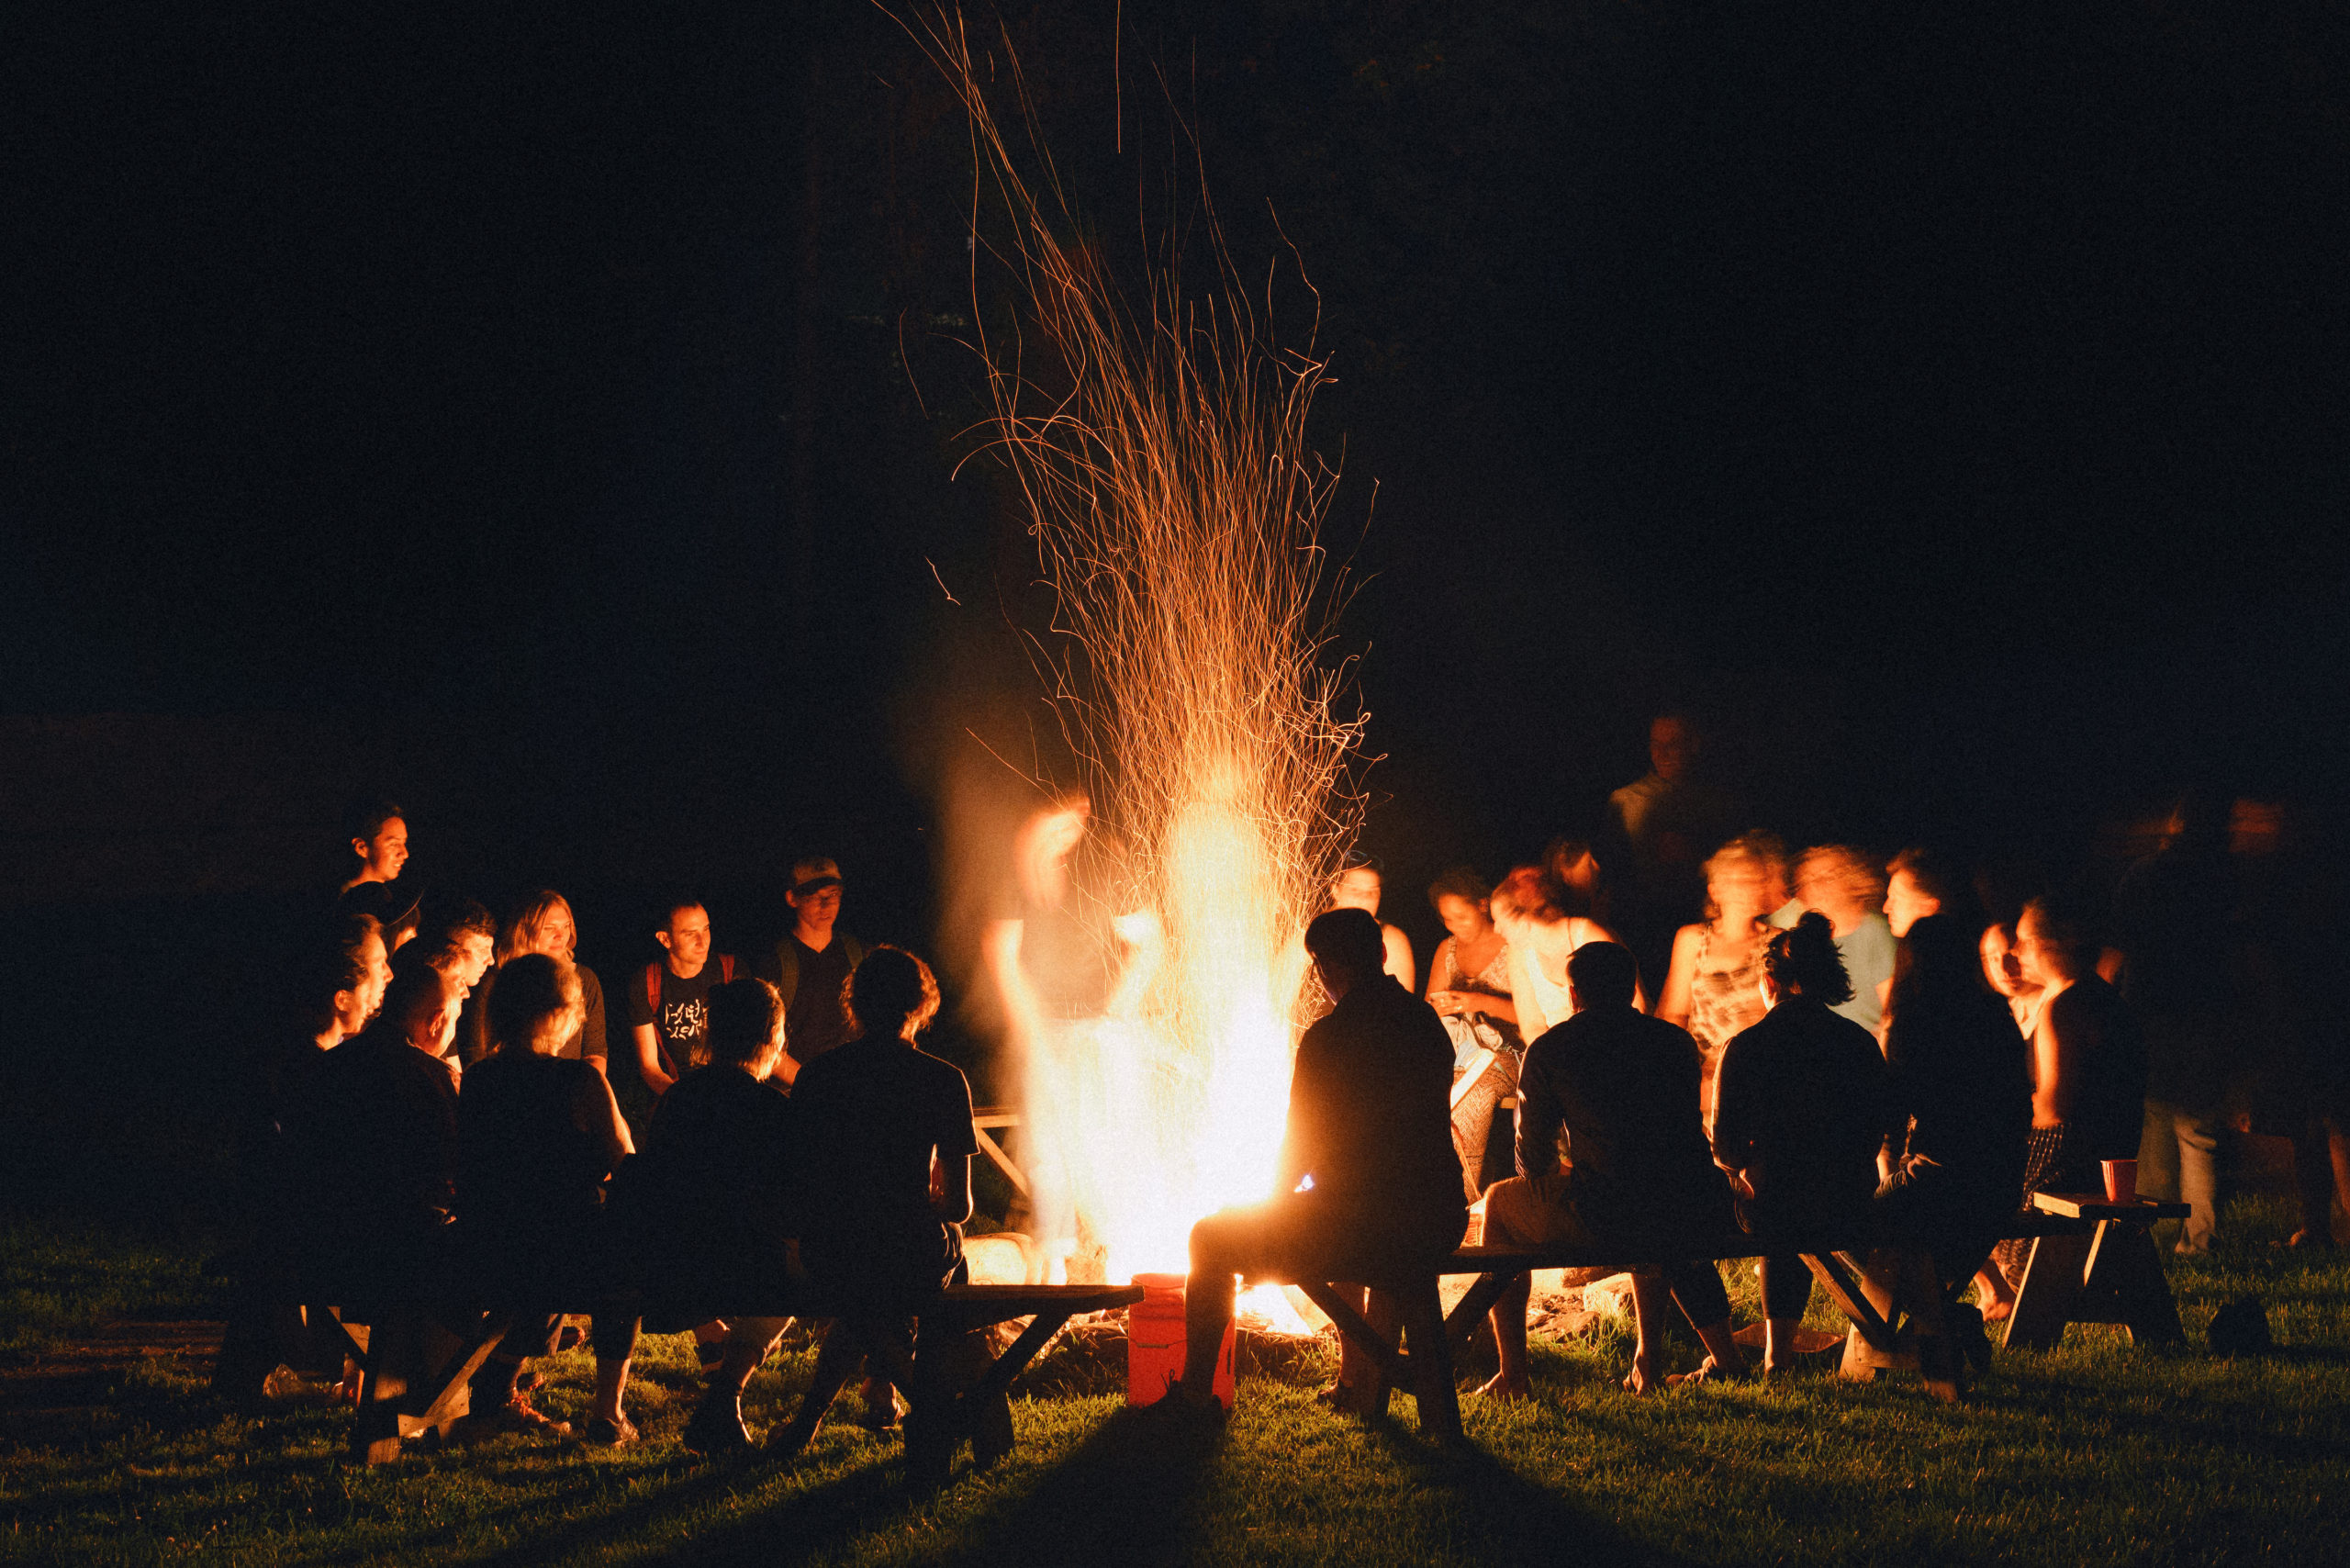 People around a bonfire